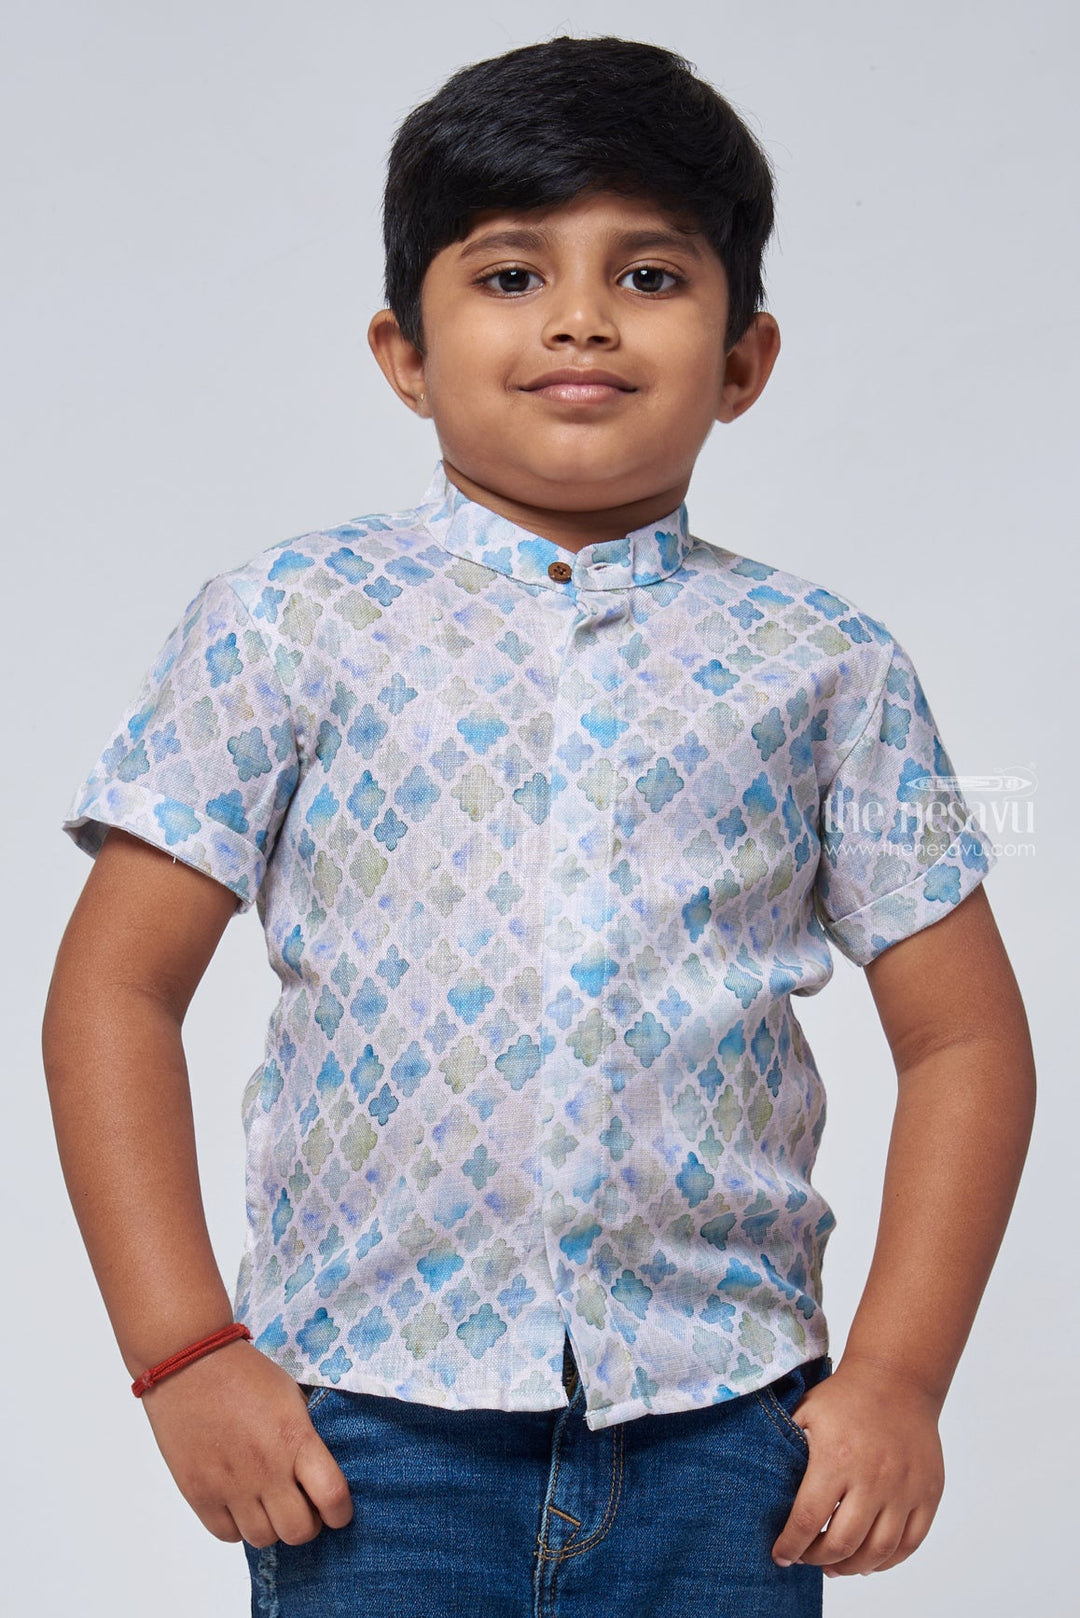 The Nesavu Boys Linen Shirt Linen Boys' Shirt with Geometric Prints for a Modern and Artistic Twist Nesavu 14 (6M) / multicolor / Linen BS065-14 Geometric Printed Linen Shirt | Baby Boys Casual Shirt | The Nesavu